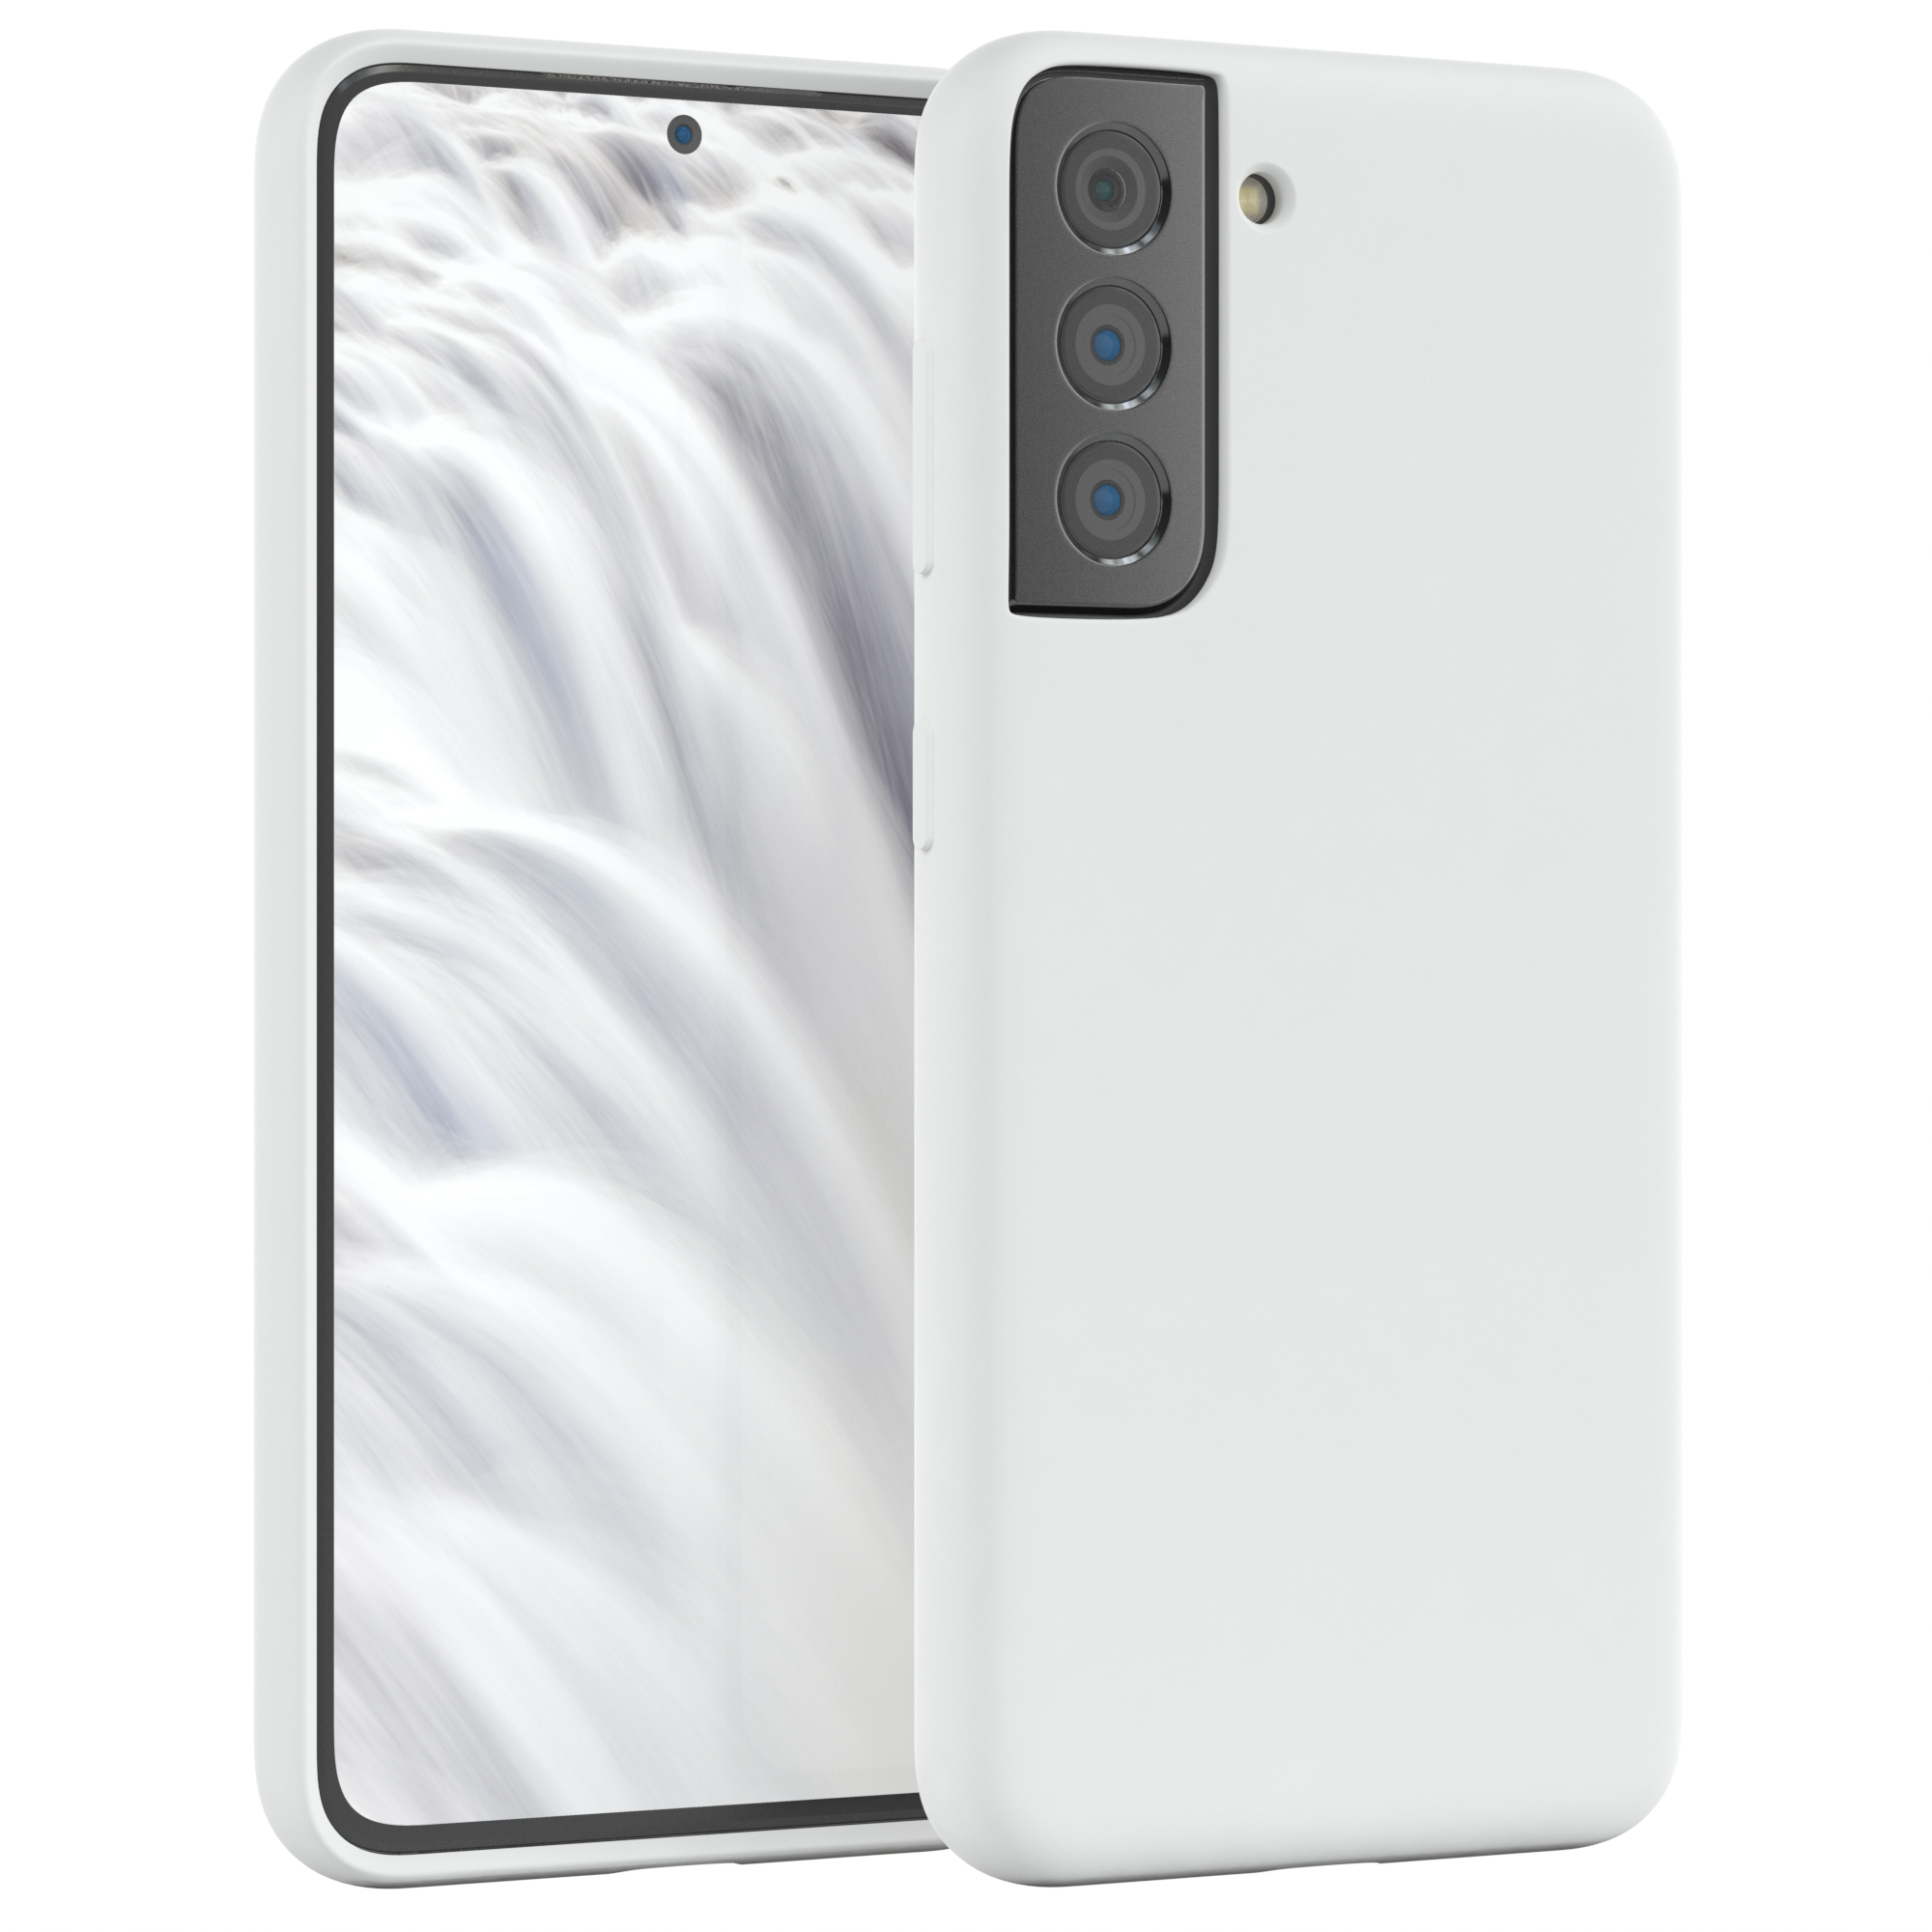 EAZY CASE Premium Silikon Handycase, S21 Weiß Galaxy Samsung, Backcover, 5G